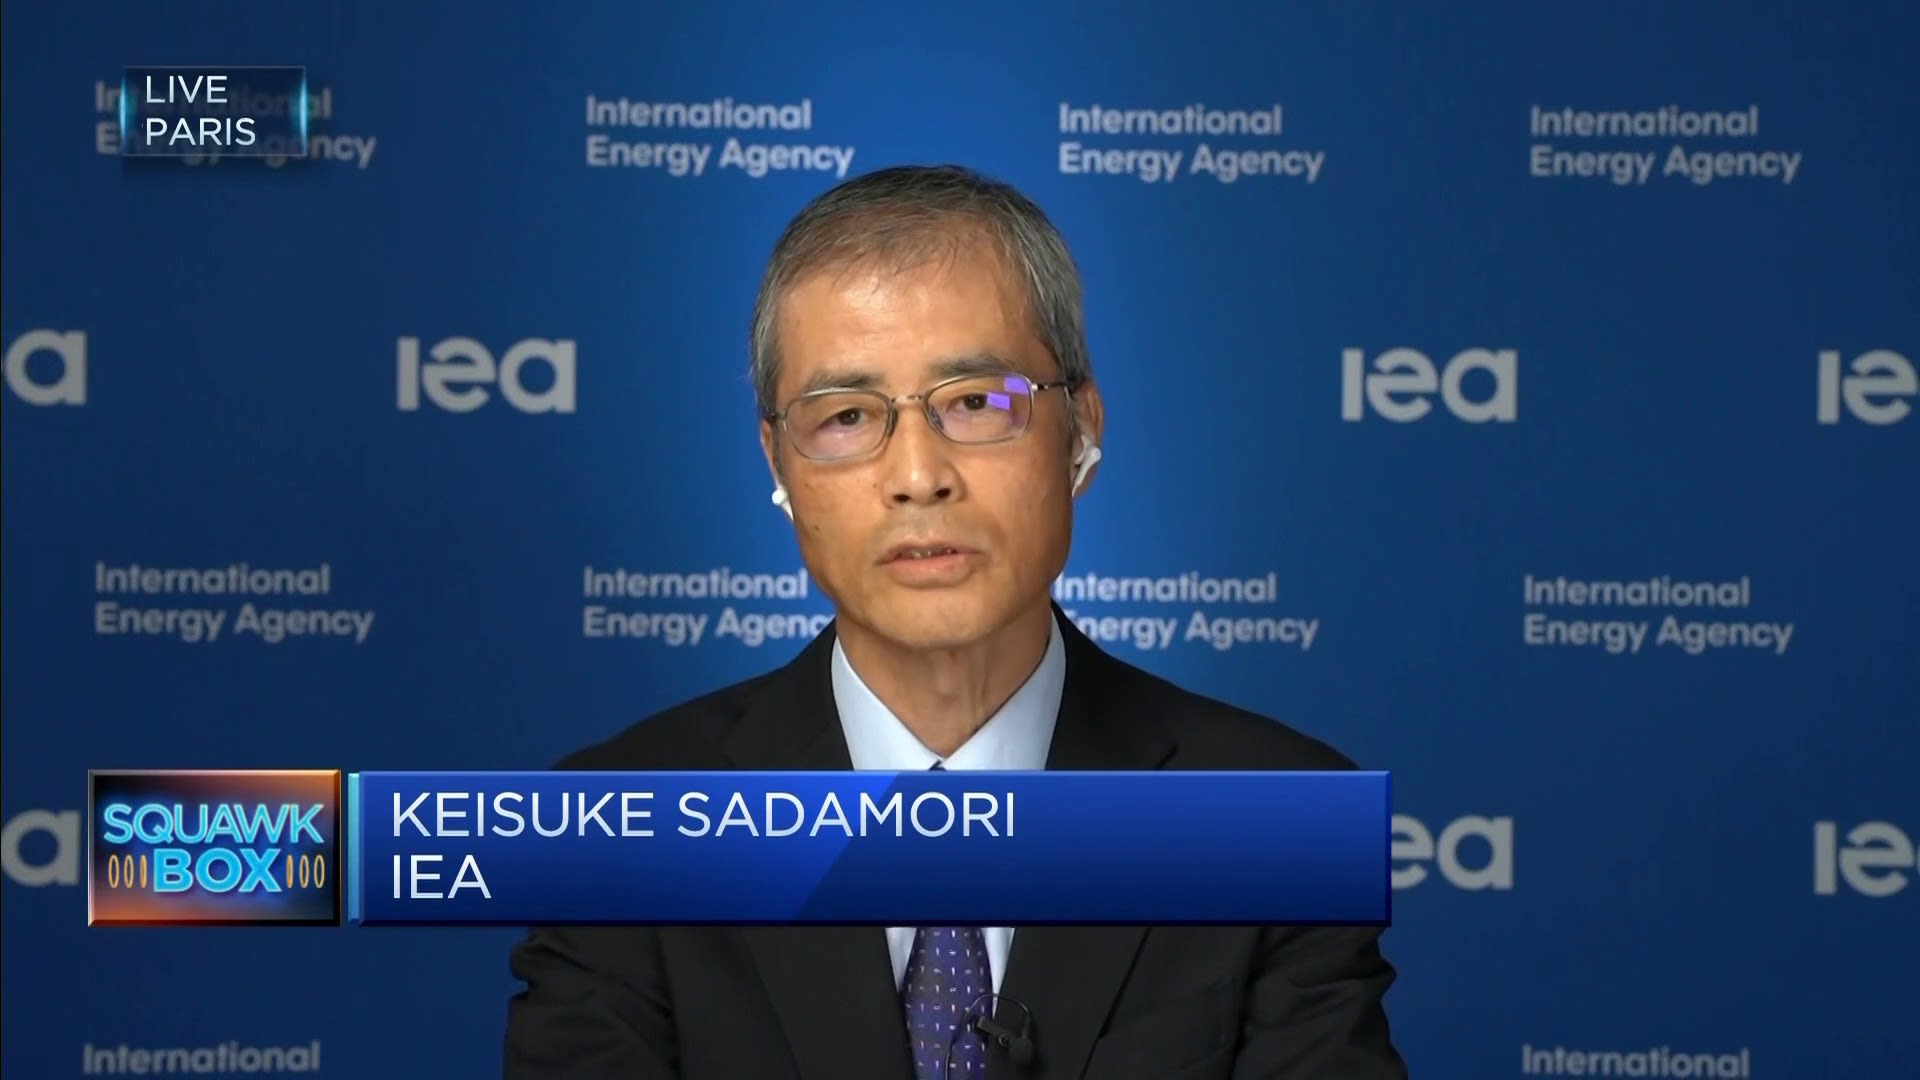 IEA: Japan's nuclear energy reversal is very good and encouraging news